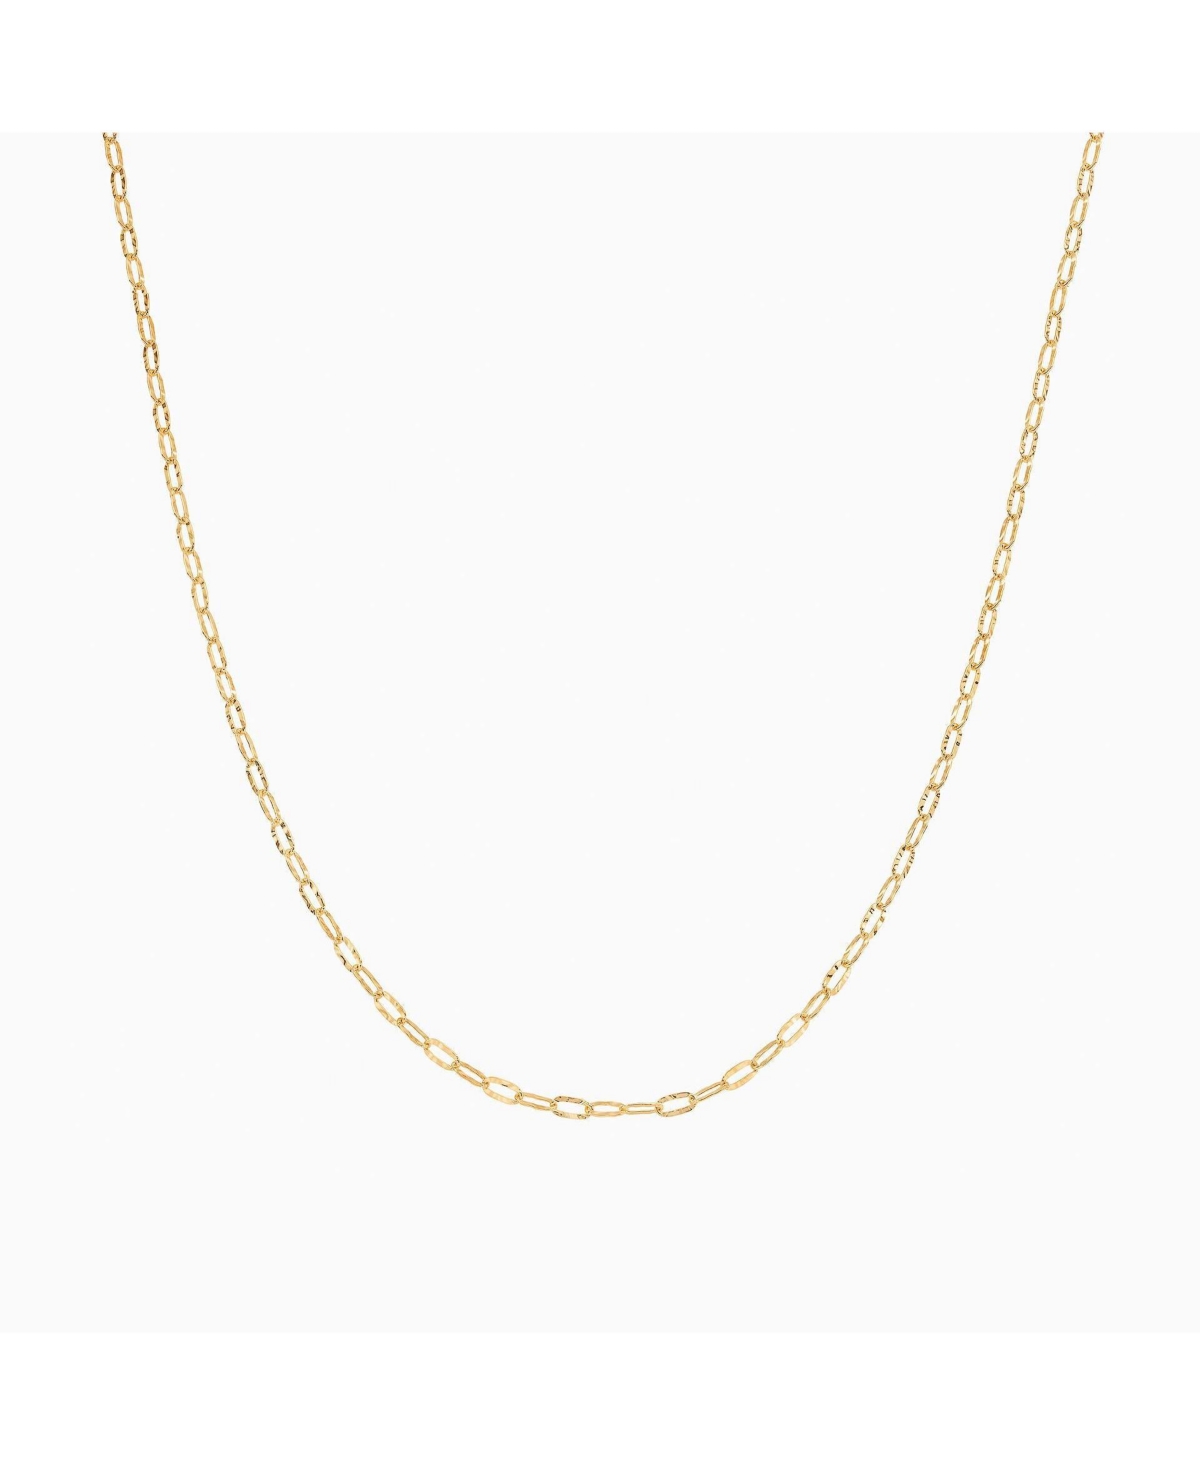 Celine Chain Necklace - Gold